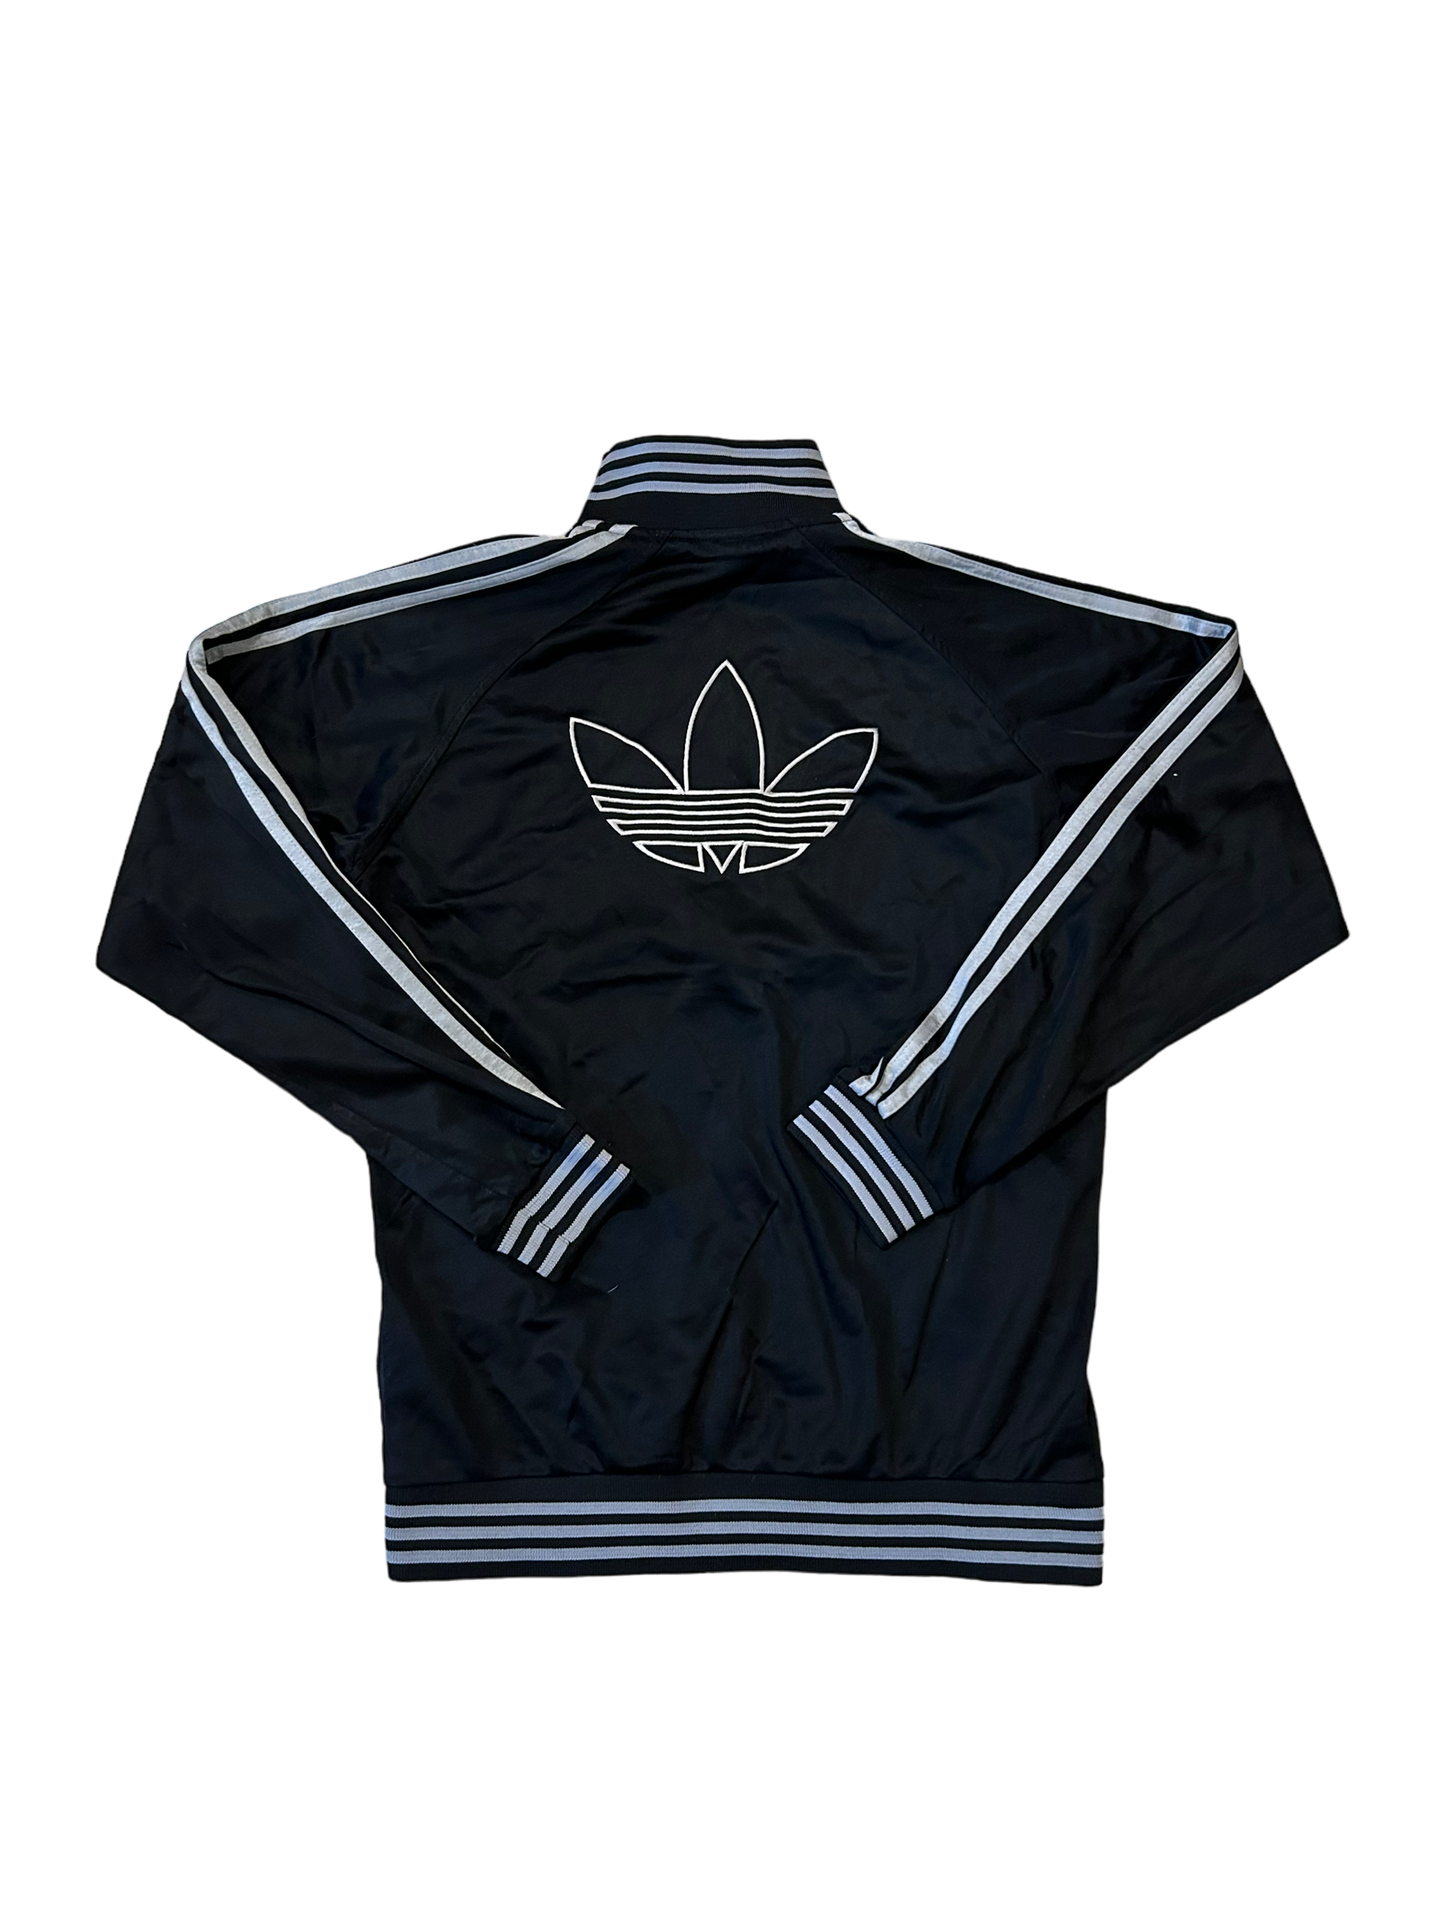 Vintage Adidas Originals Jacket